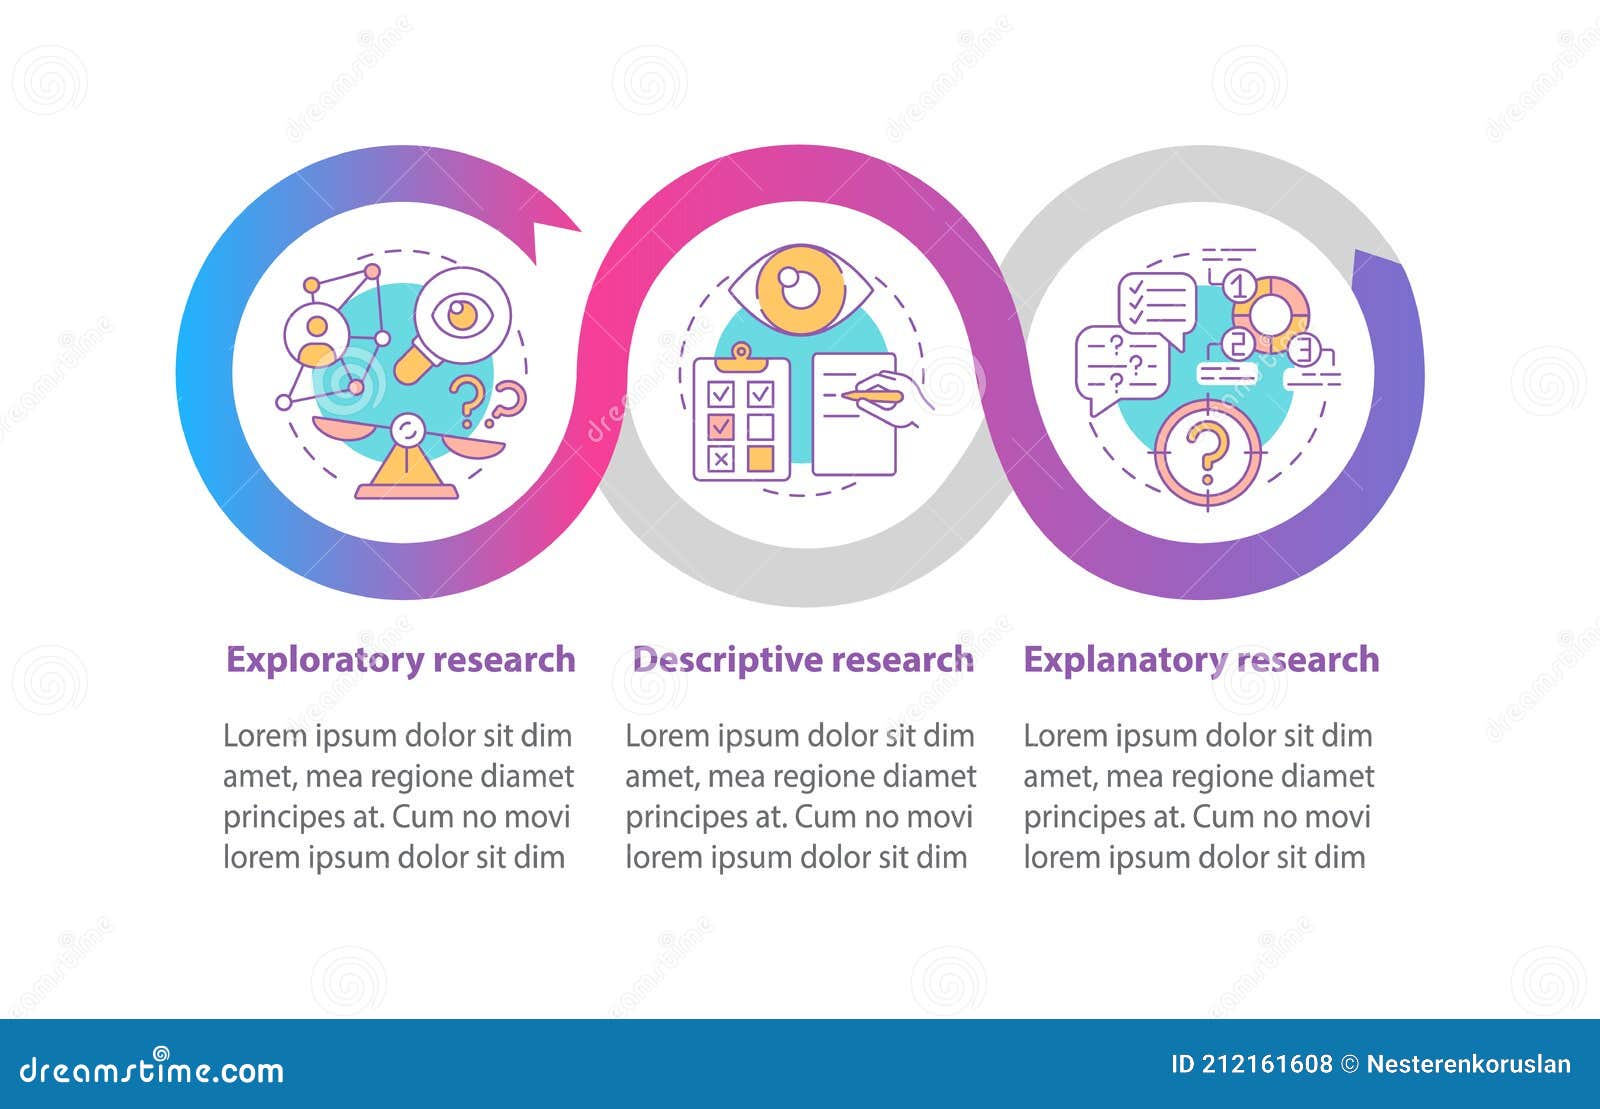 descriptive research  infographic template